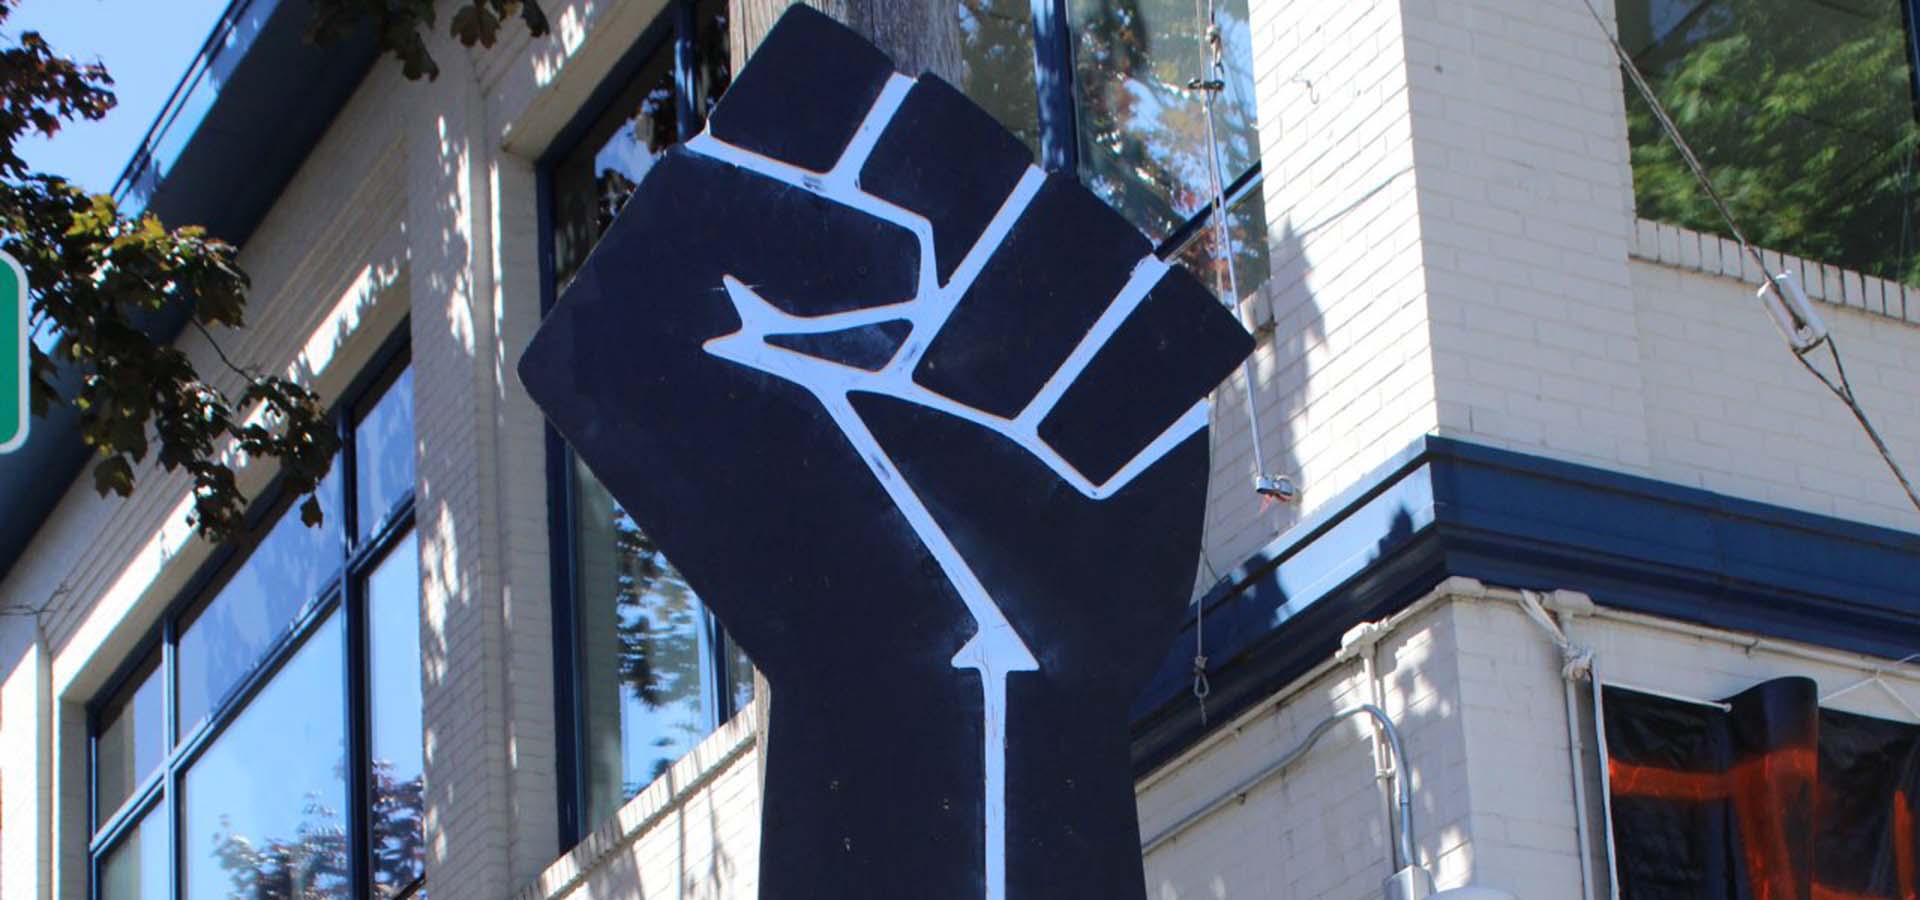 Black Lives Matter art of giant black fist in the air.